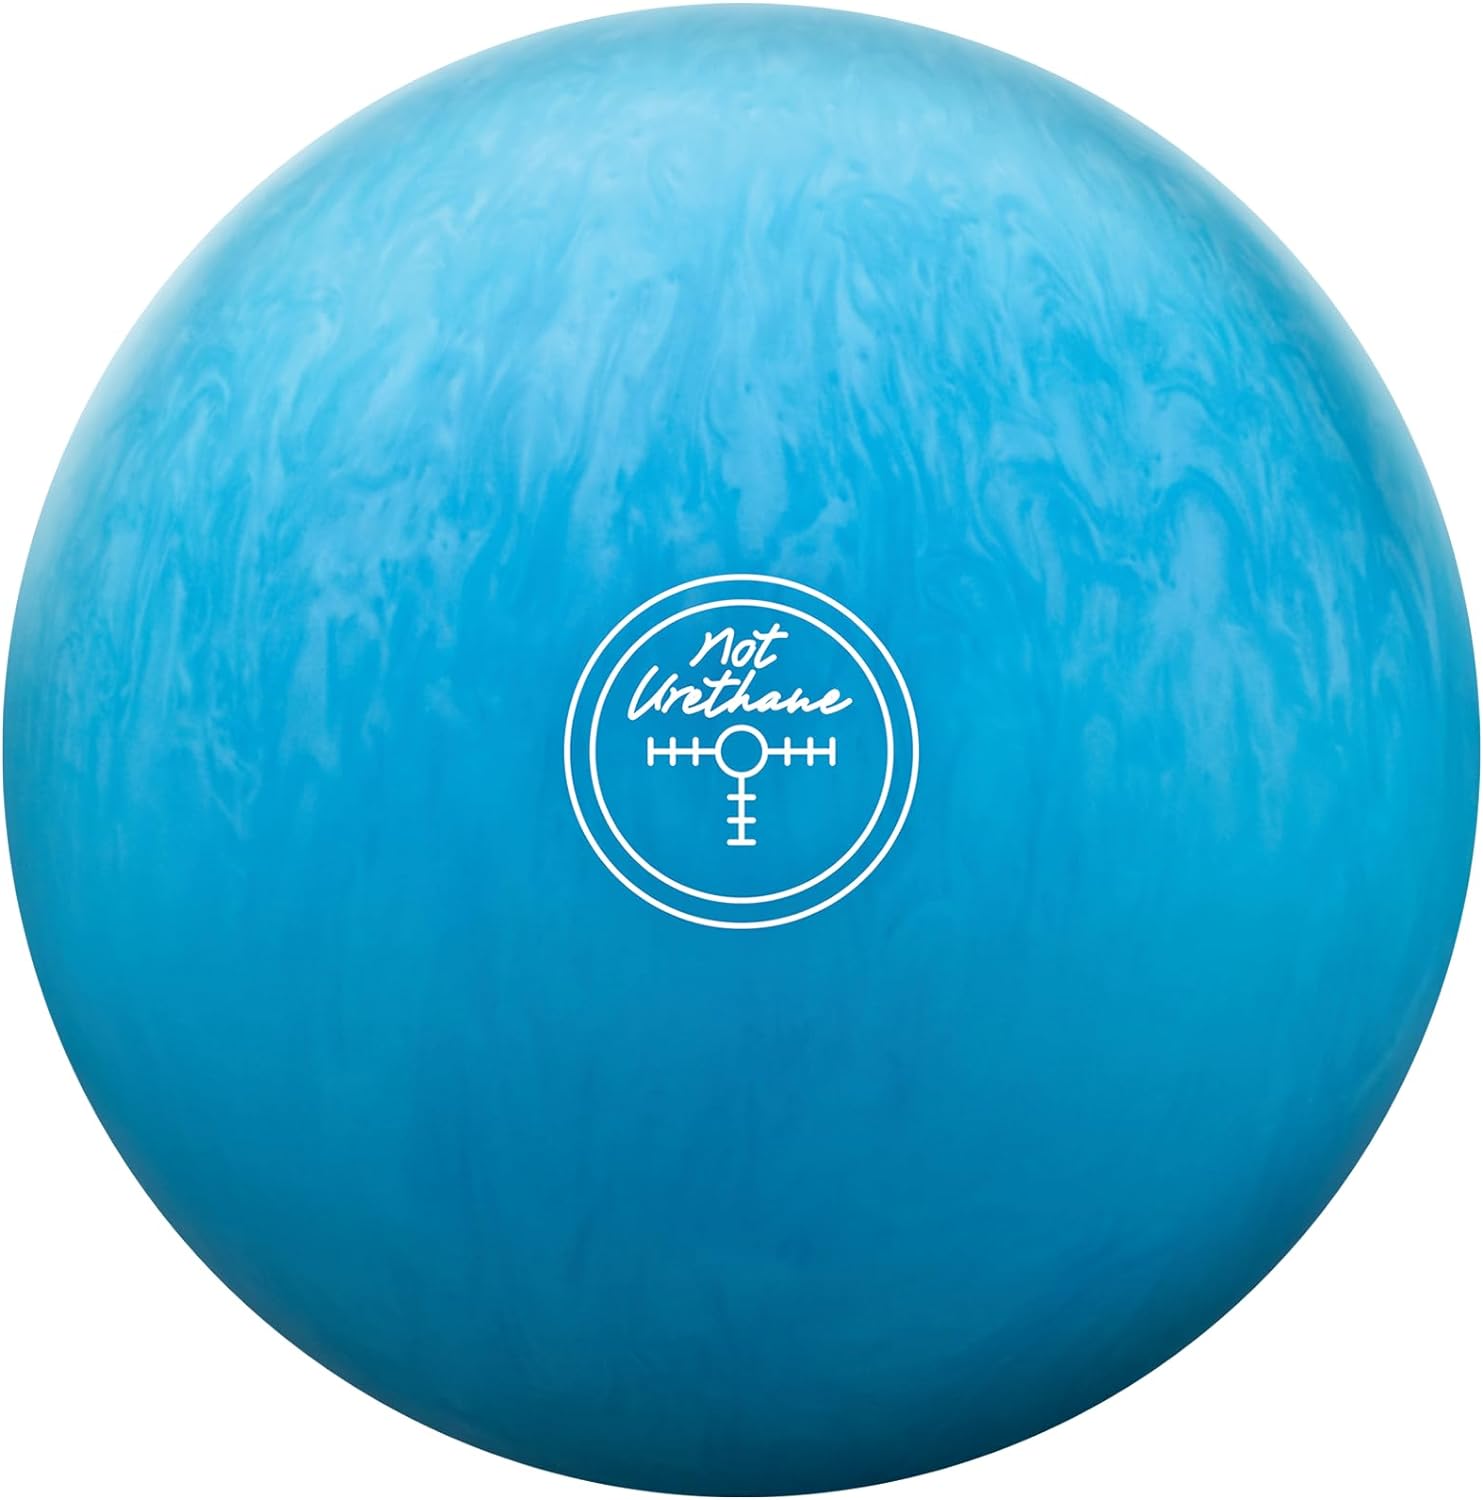 Hammer NU Blue Bowling Ball